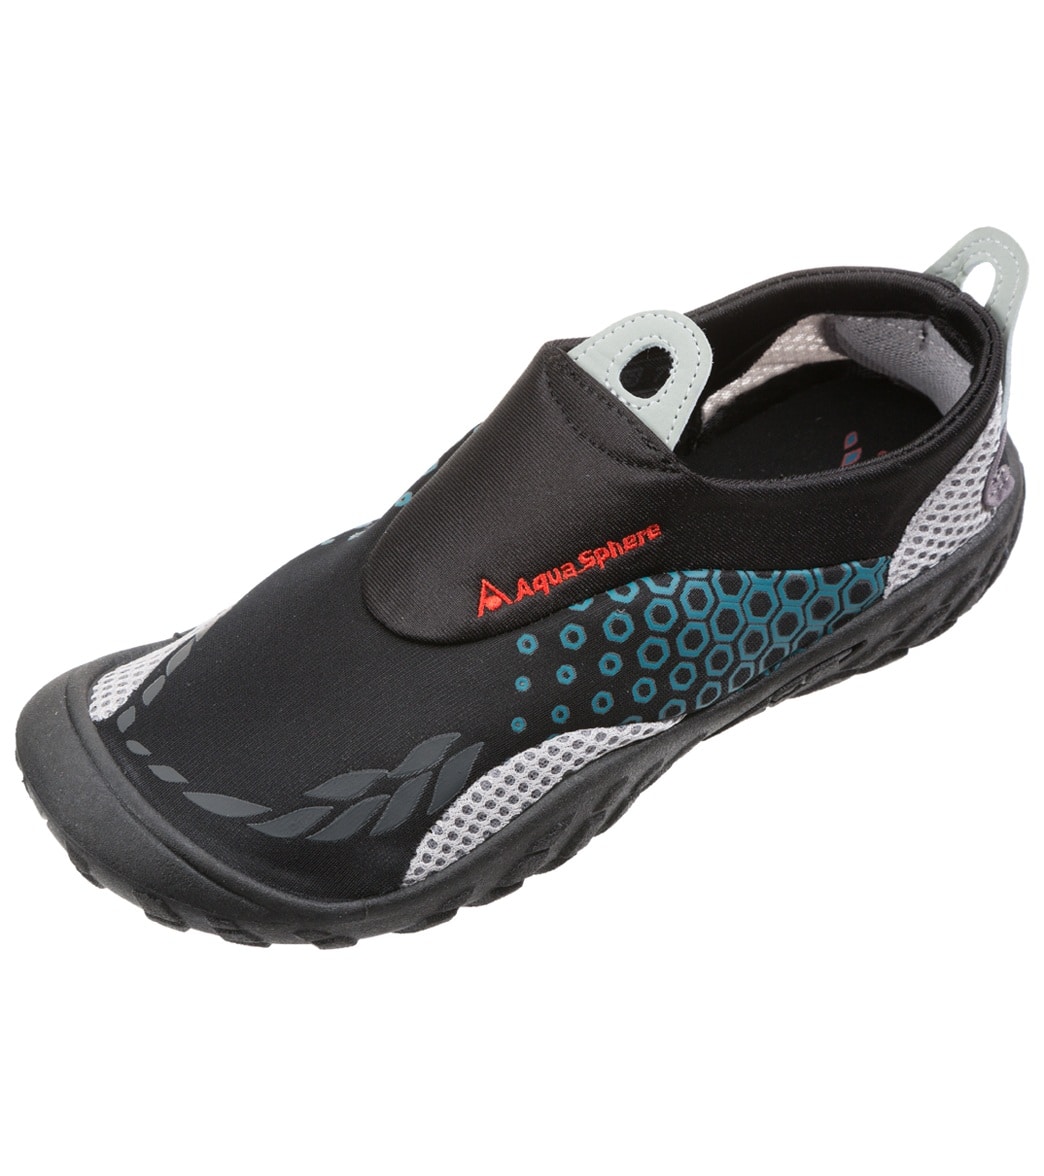 Aqua Sphere Sporter Water Shoe at 